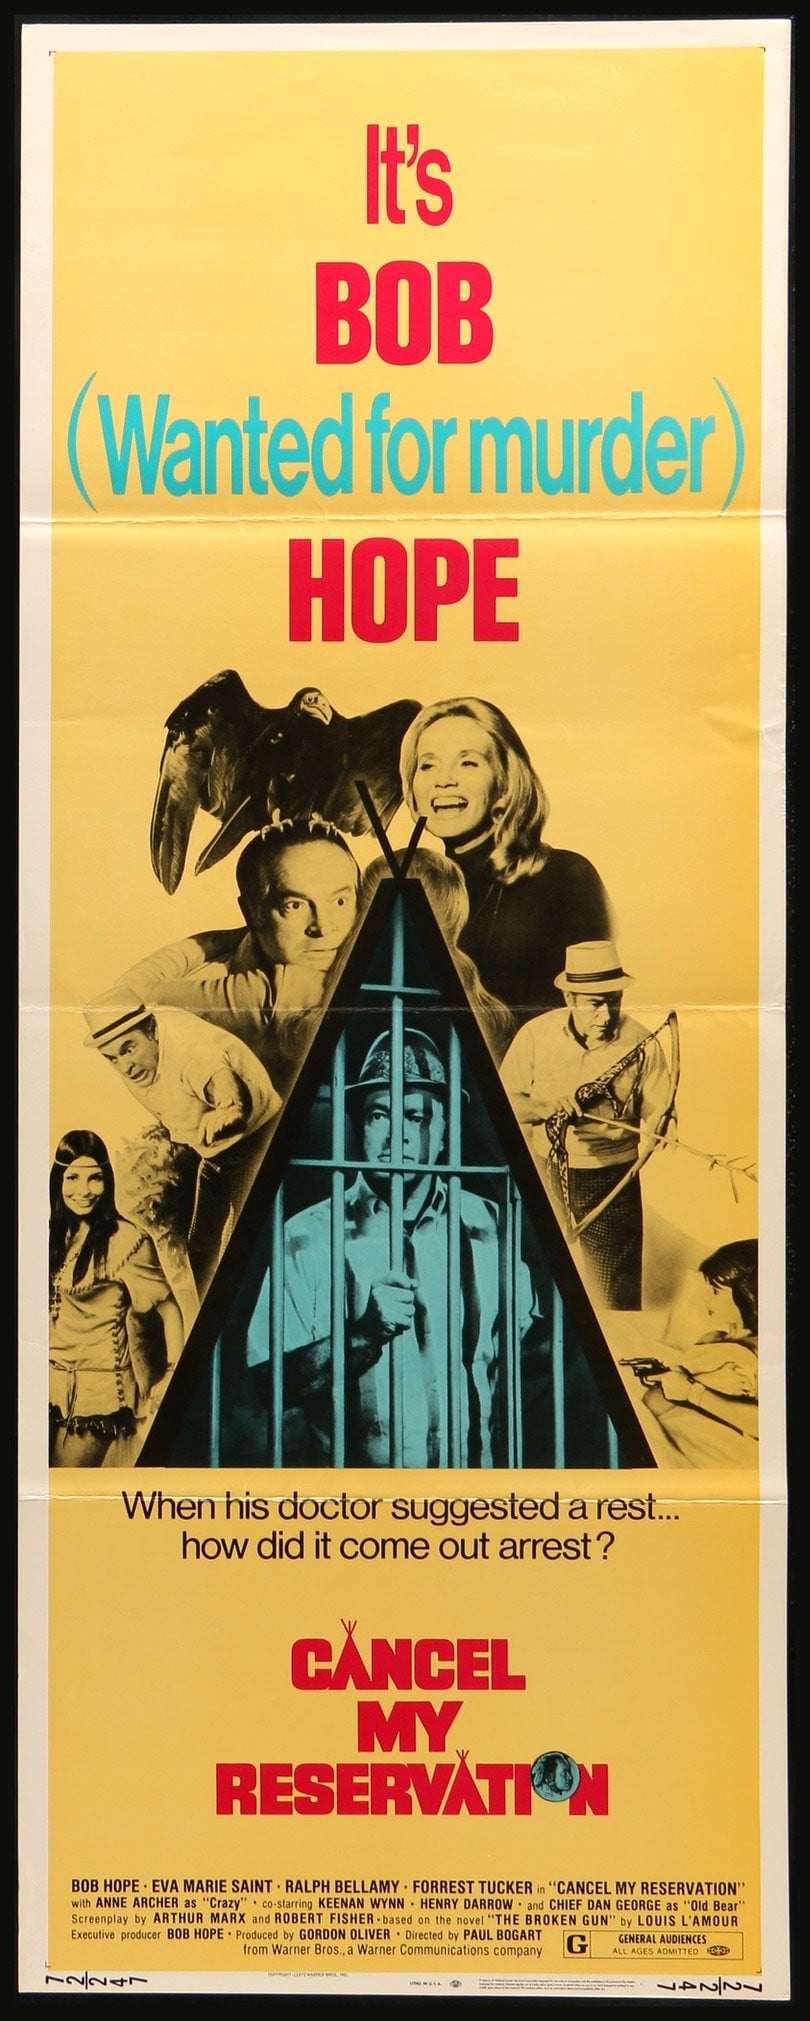 Cancel My Reservation (1972) original movie poster for sale at Original Film Art